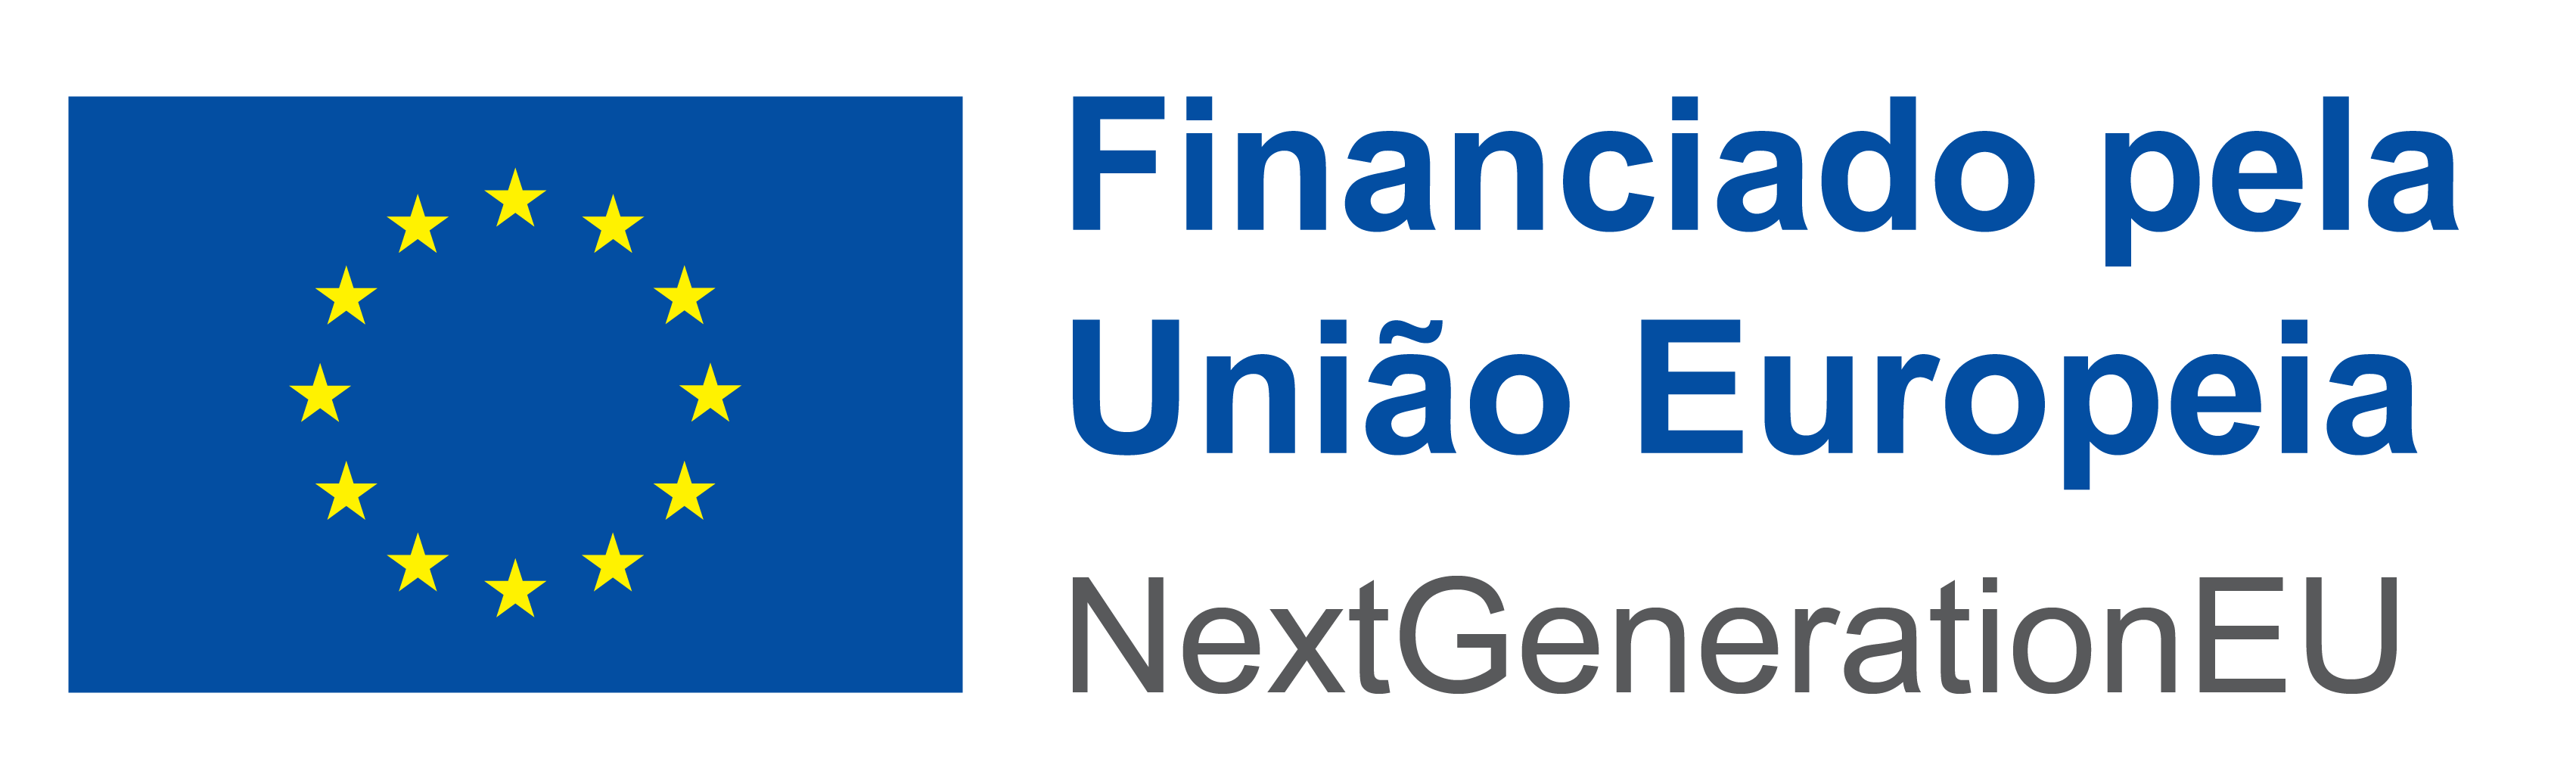 NextGenerationEU_logo